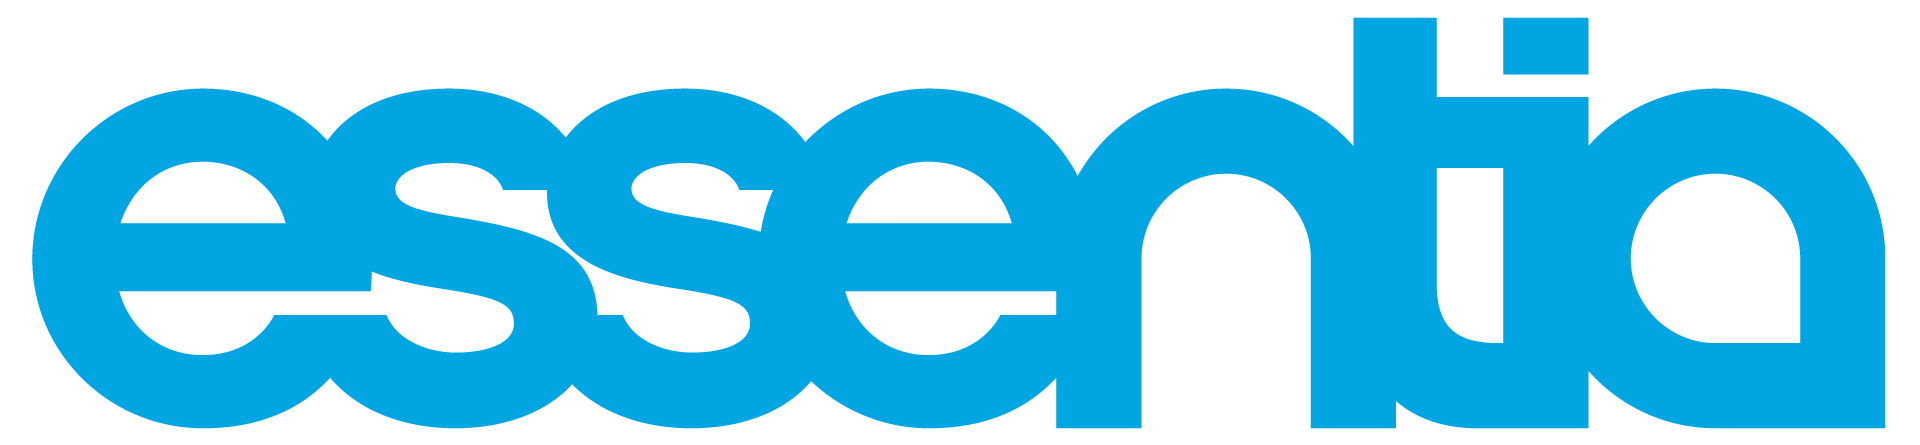 Essentia-logo